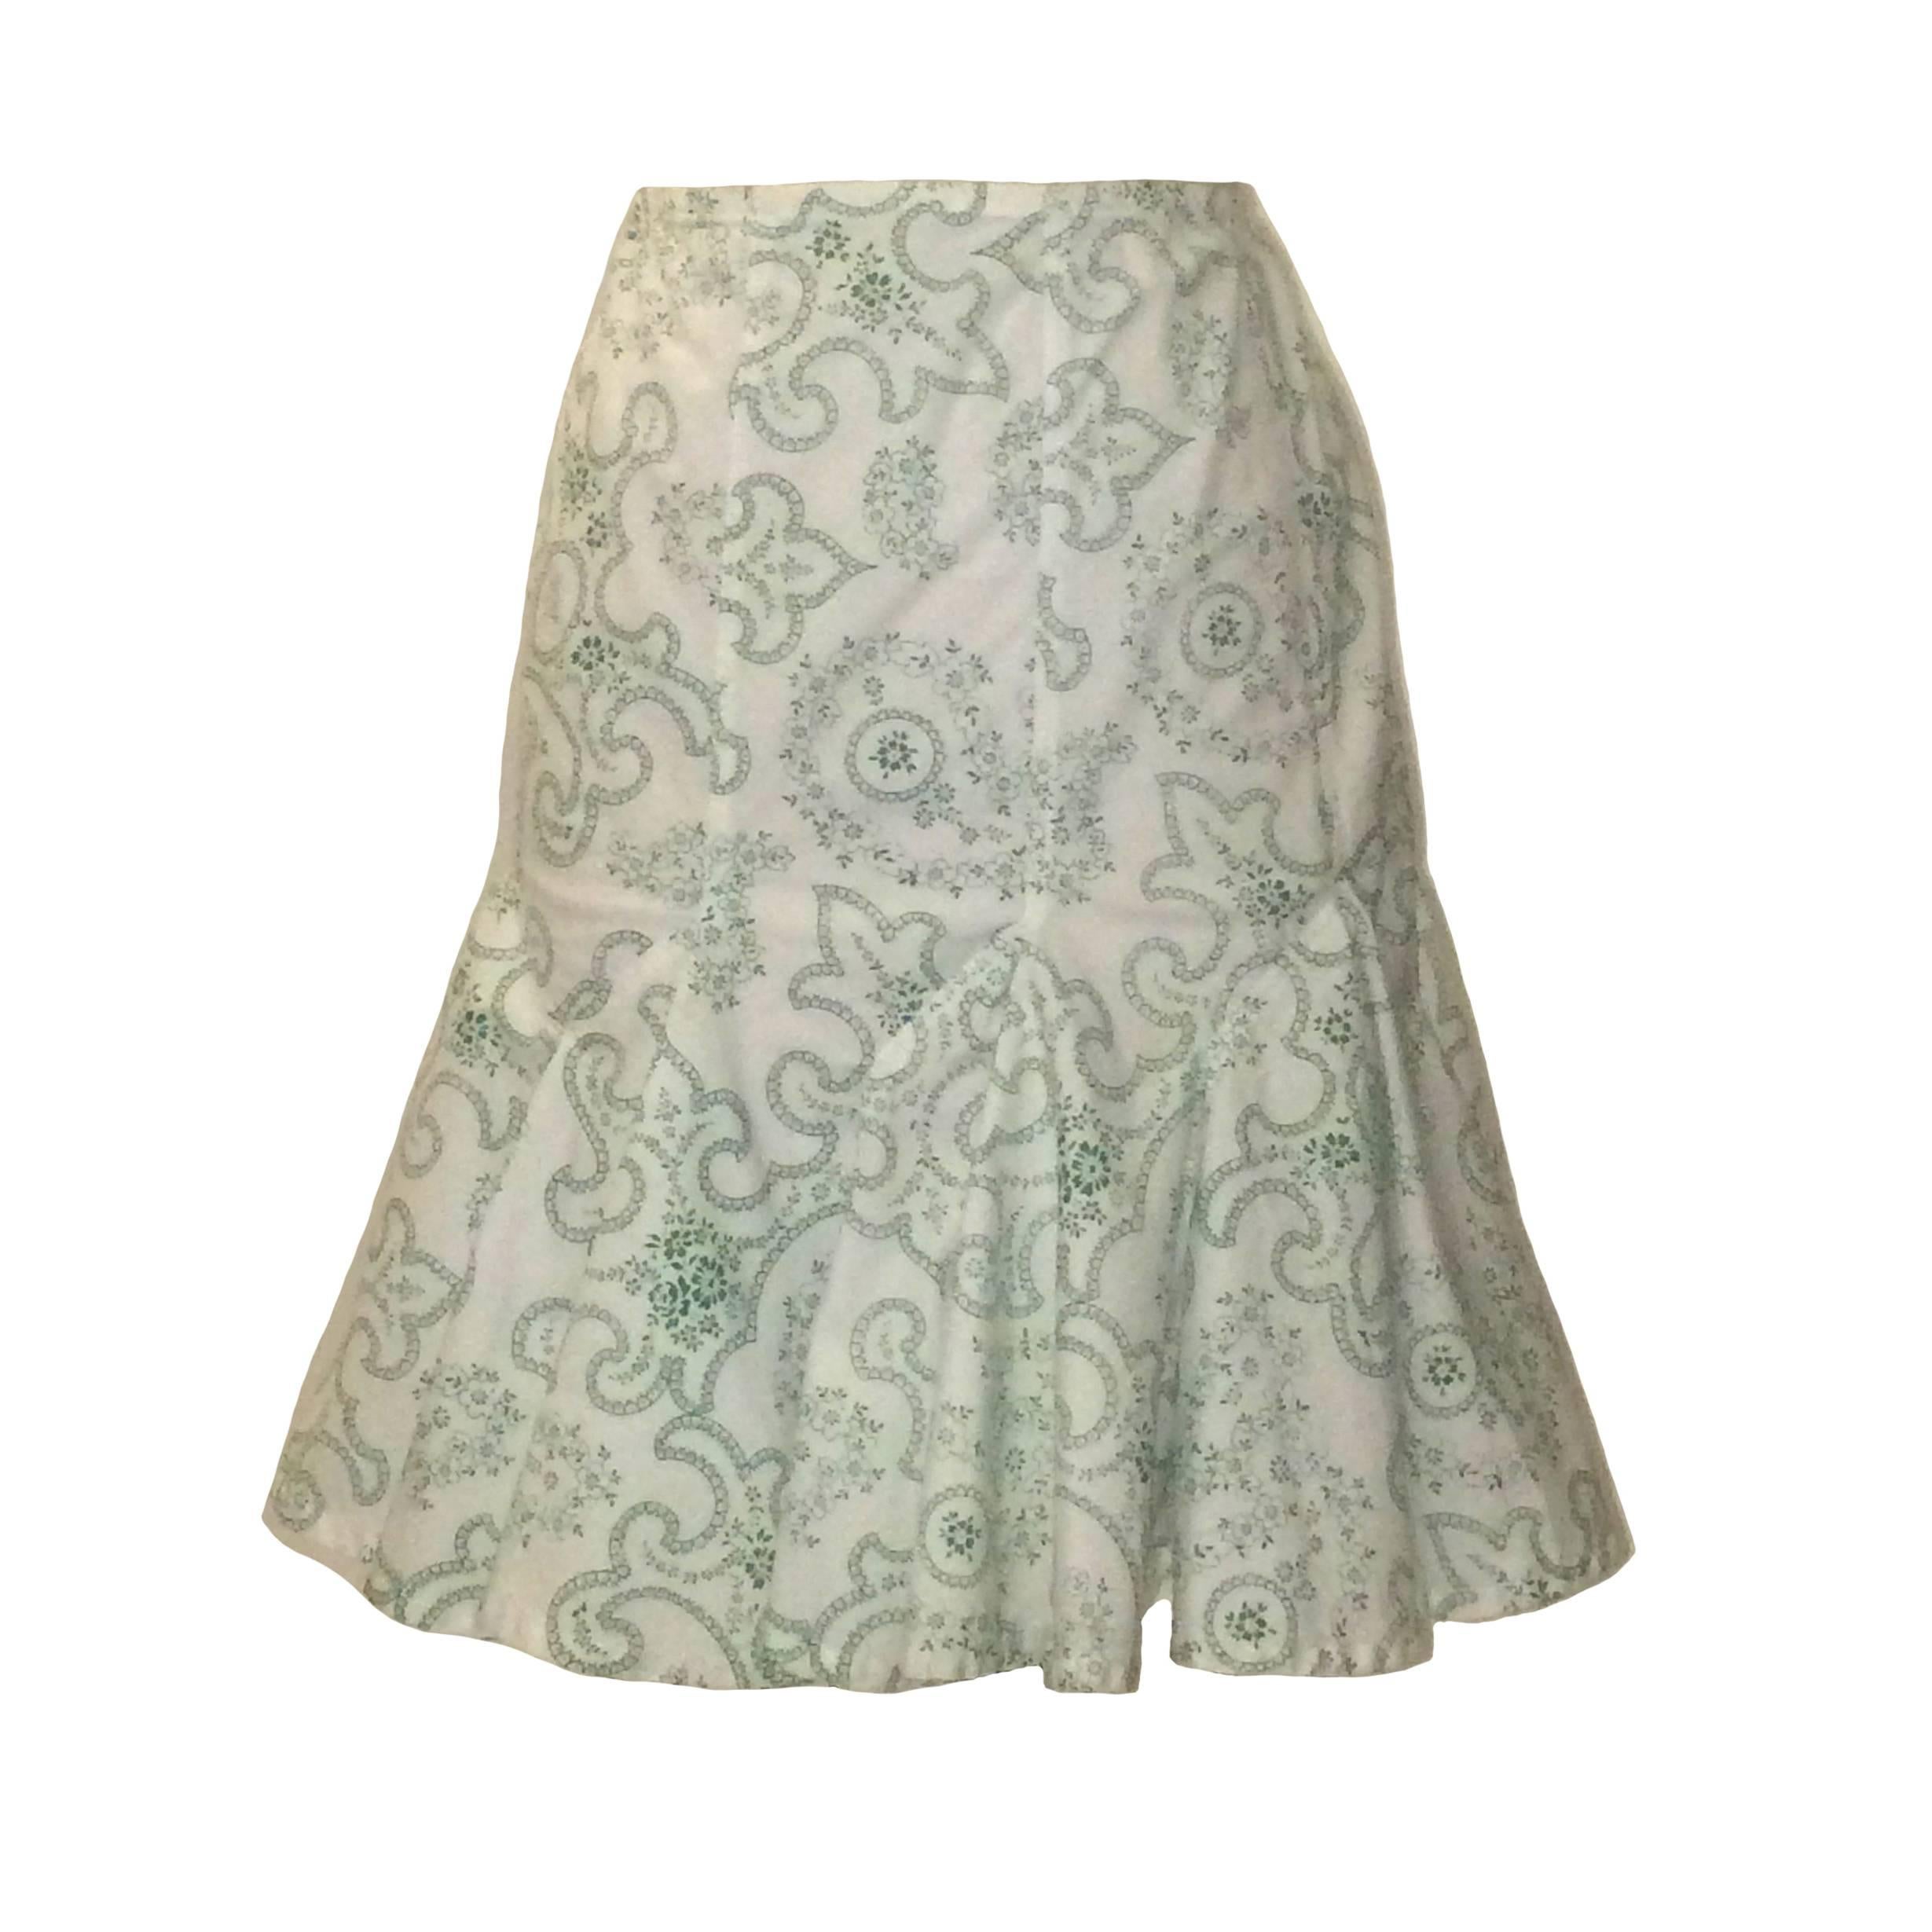 Alaia White and Green Floral Paisley Flair Bottom Pencil Skirt 